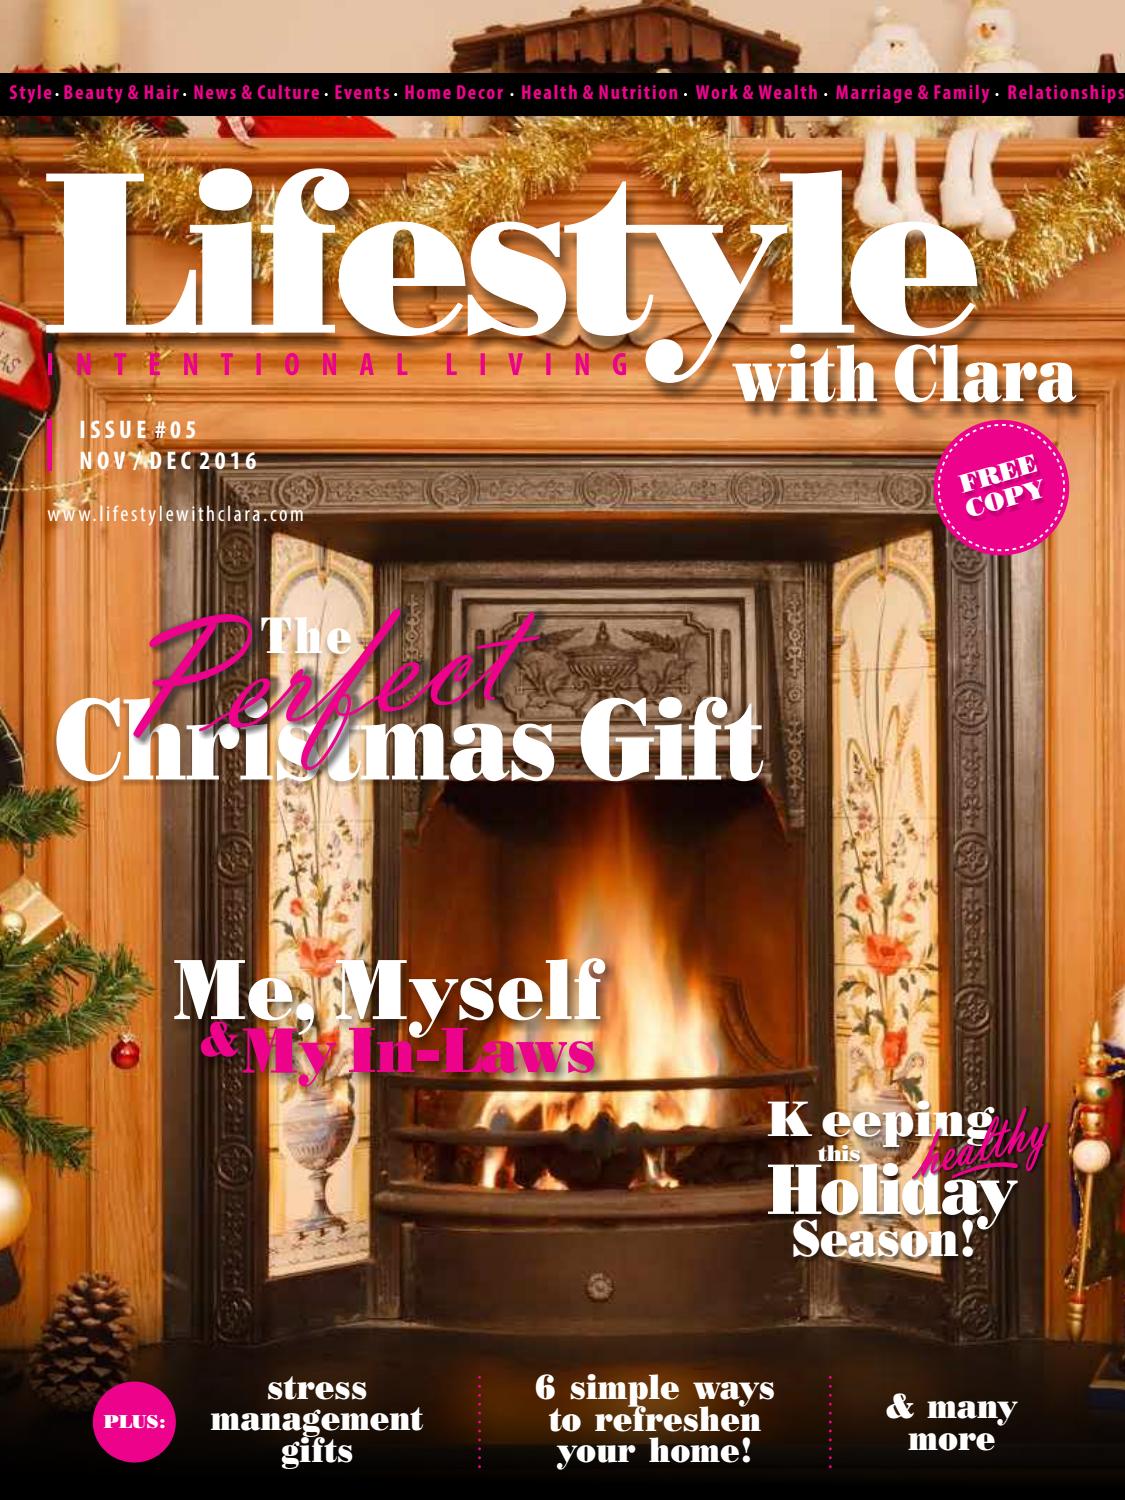 Bjs Fireplace Elegant Lifestyle with Clara Nov Dec 2016 by Mwari issuu